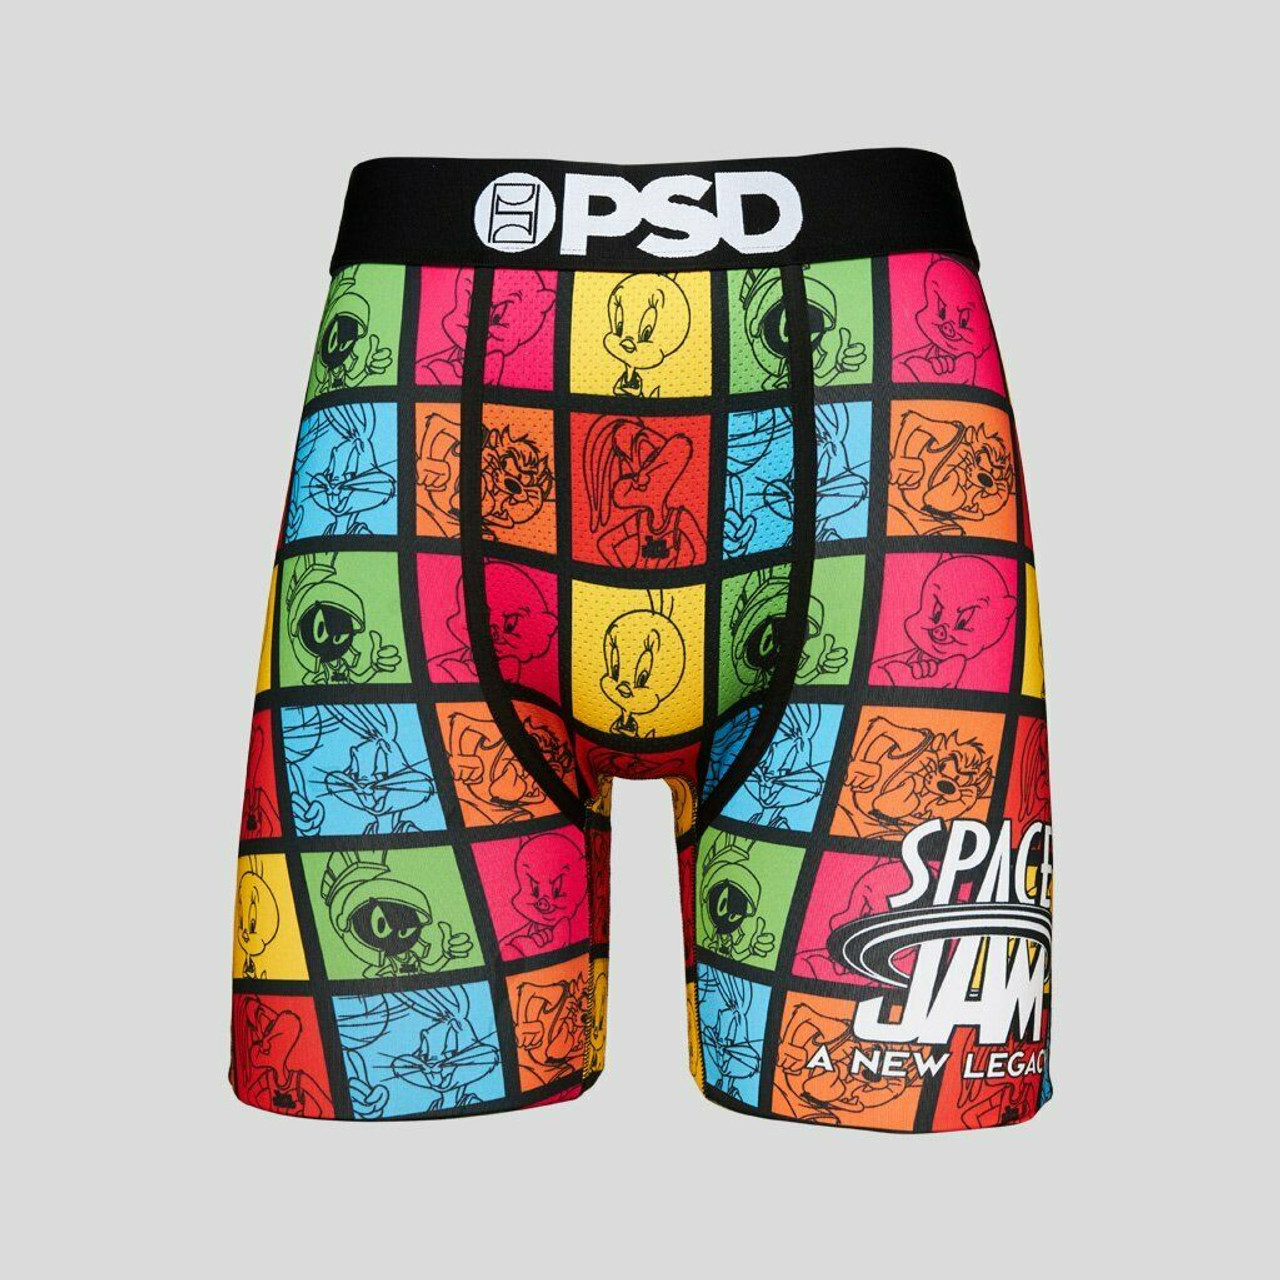 PSD - Space Boxer Brief by PSD Underwear